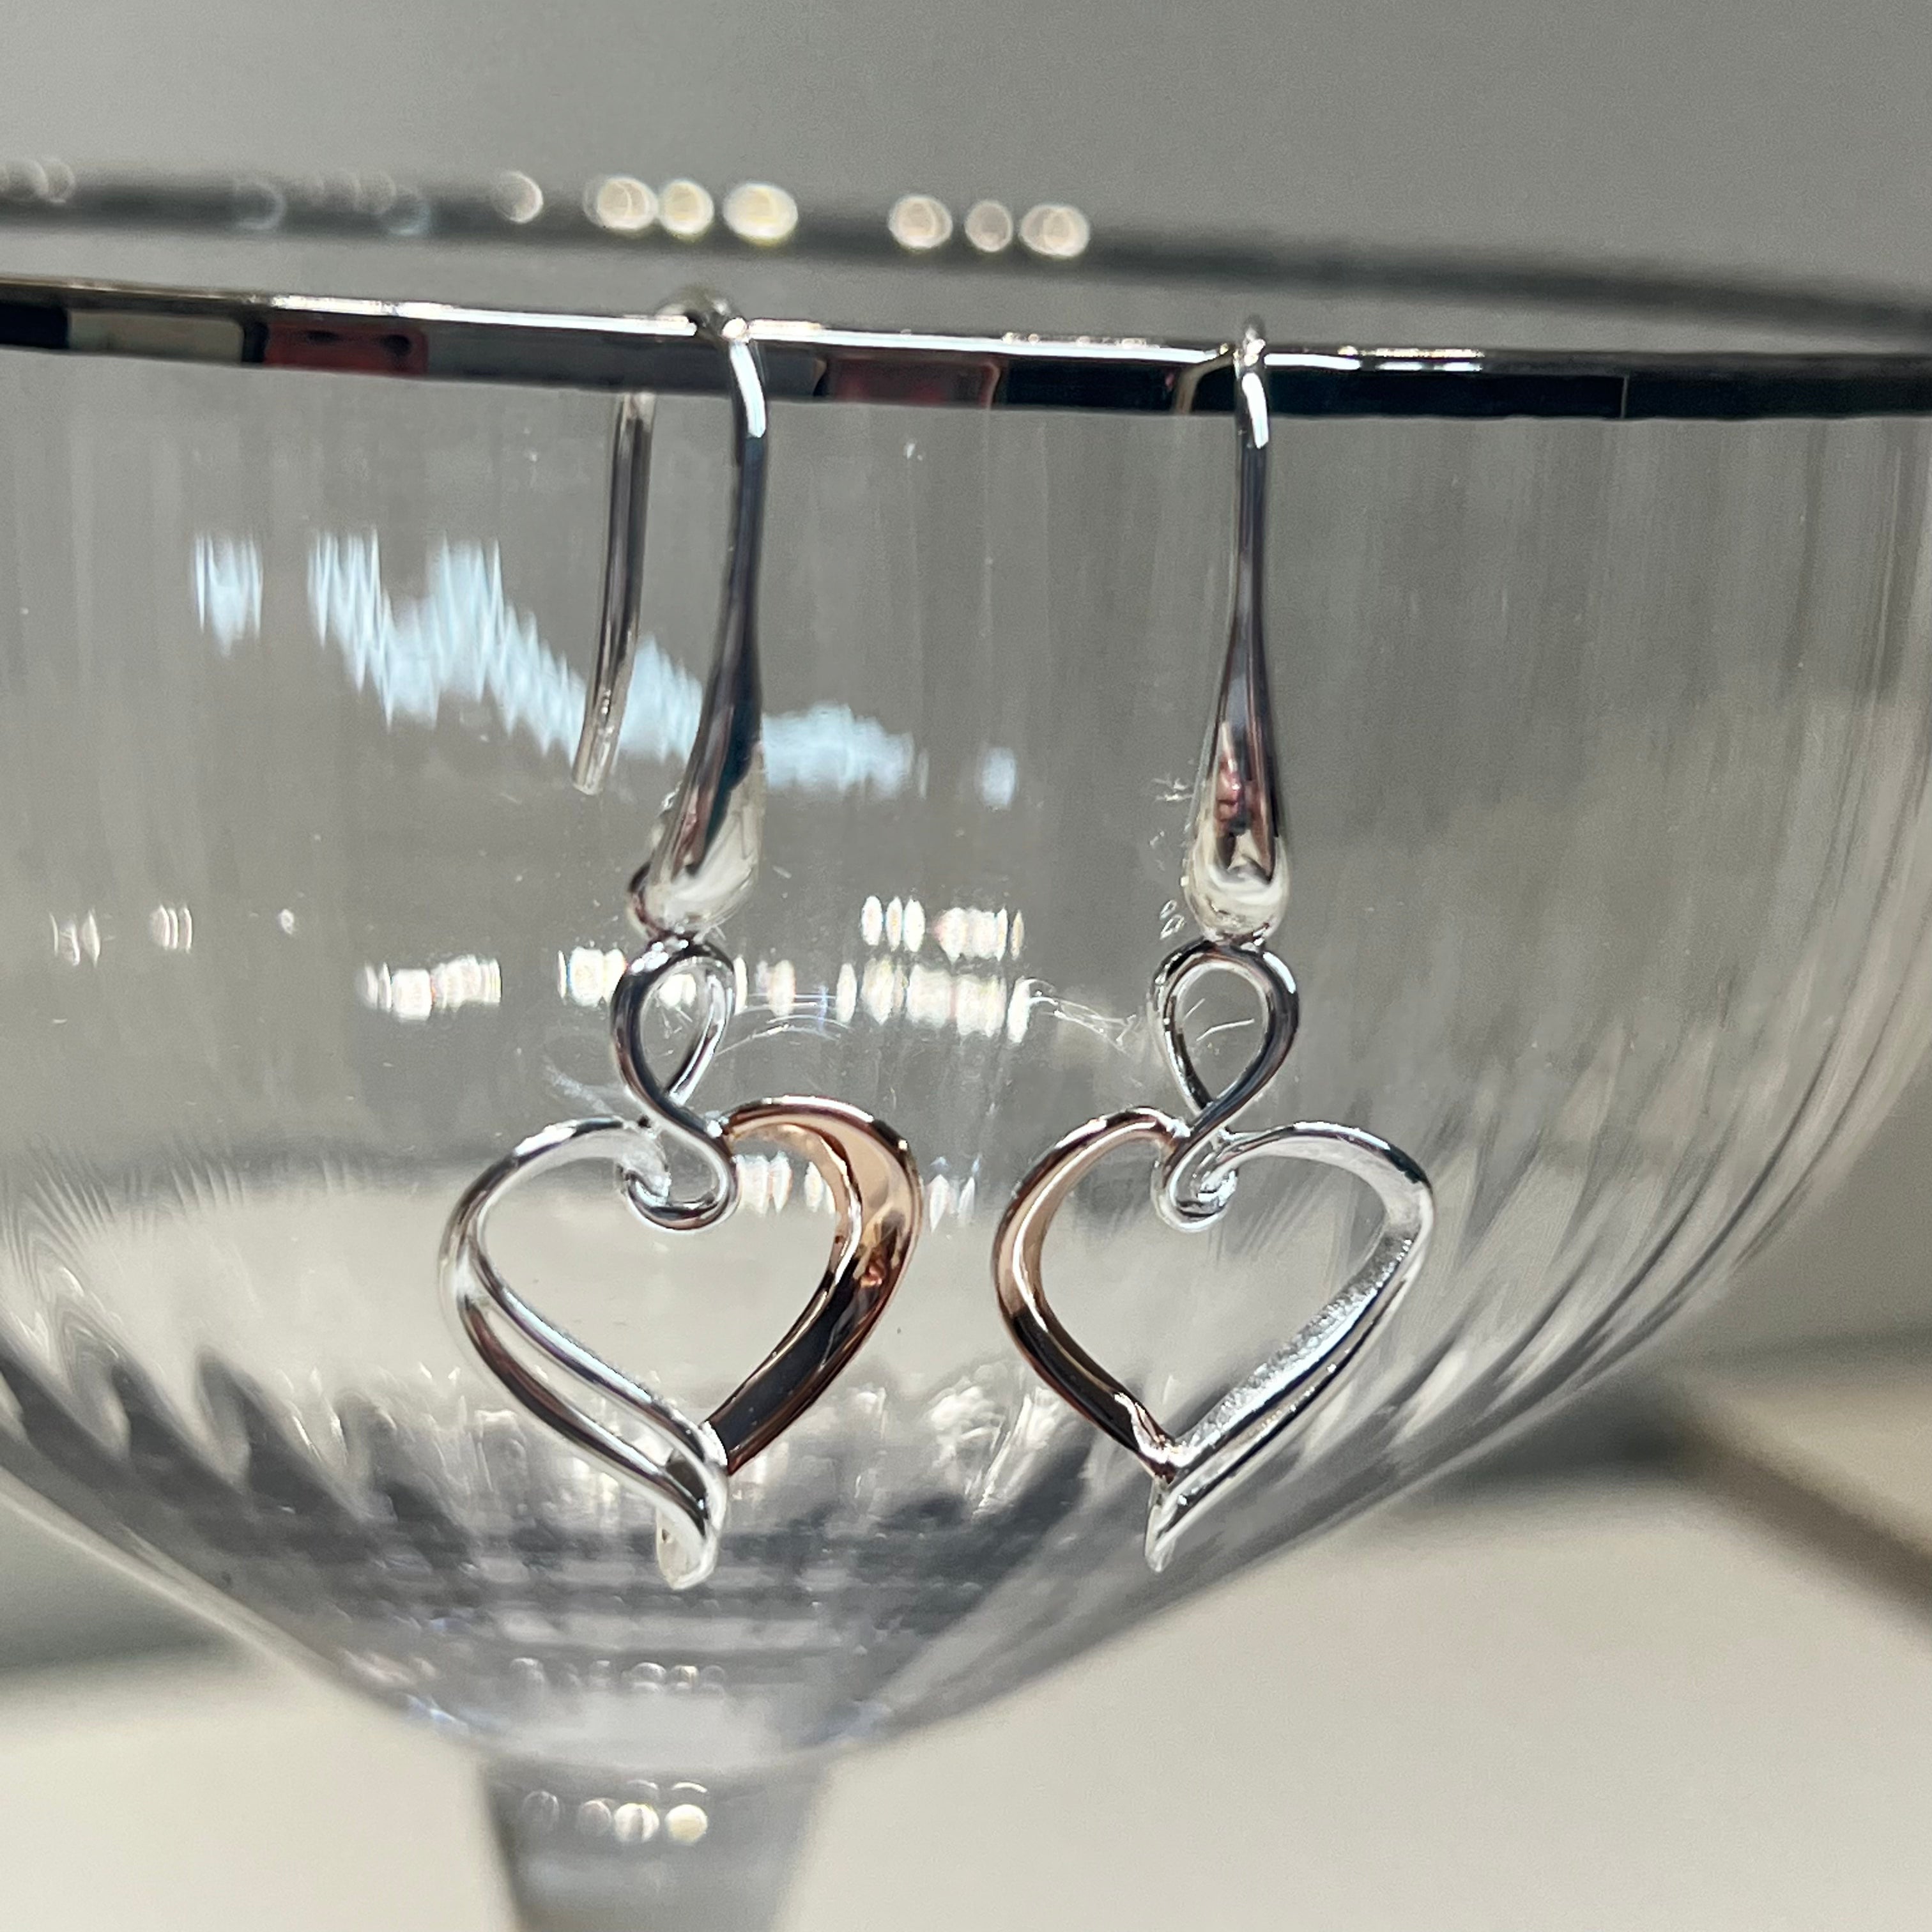 Unique Sterling Silver Open Swirl Heart with Rose Gold Drop Earrings